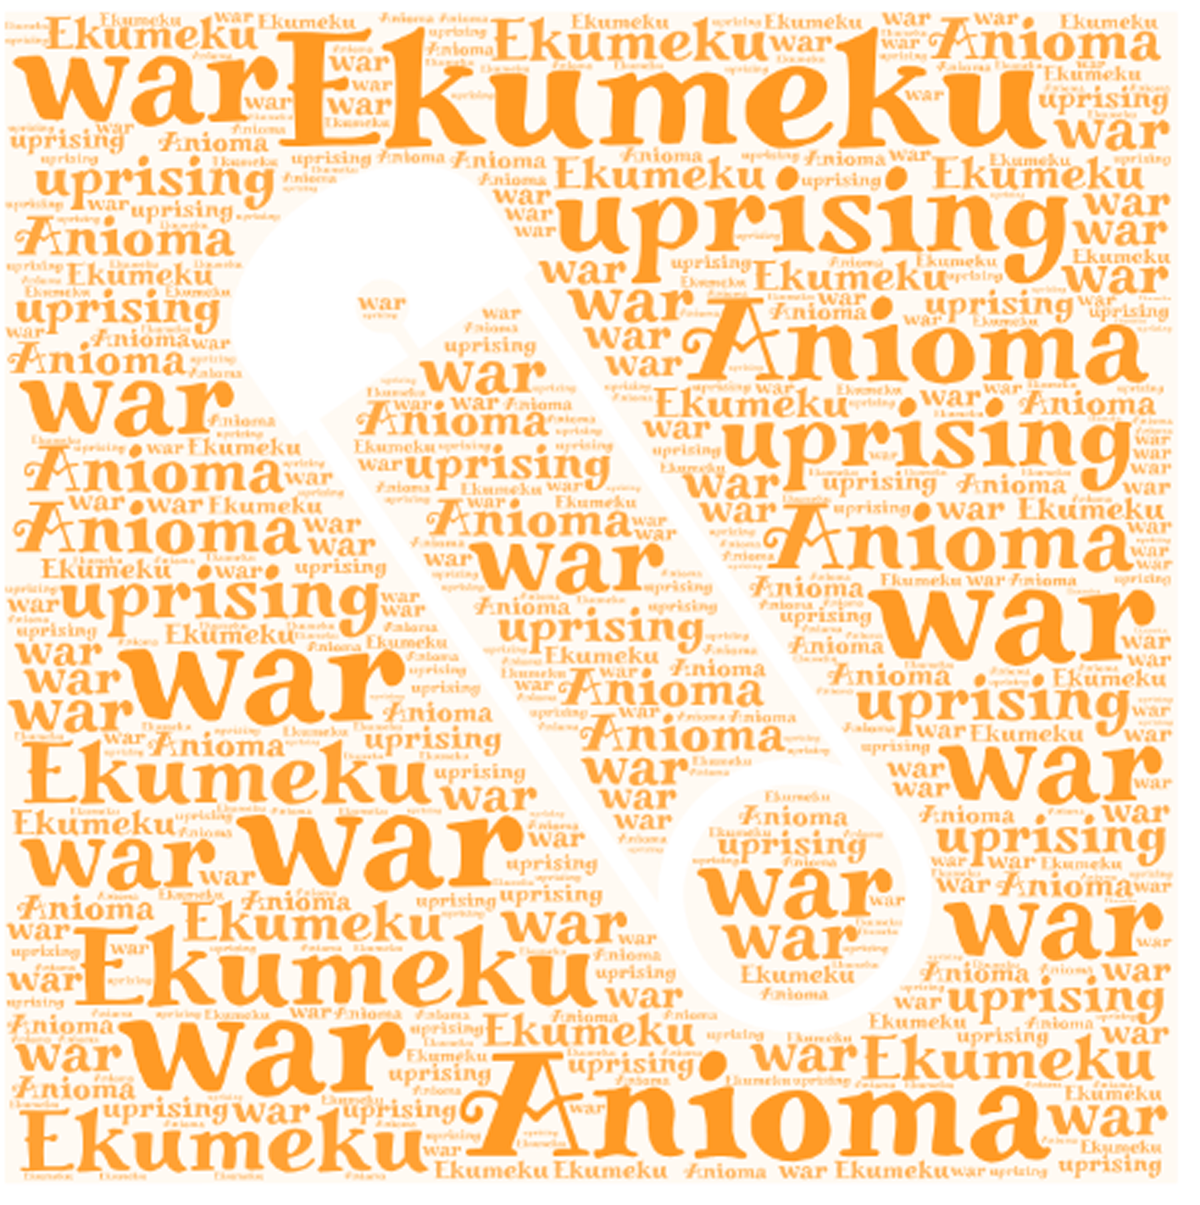 Ekumeku war: Anioma uprising against British rule